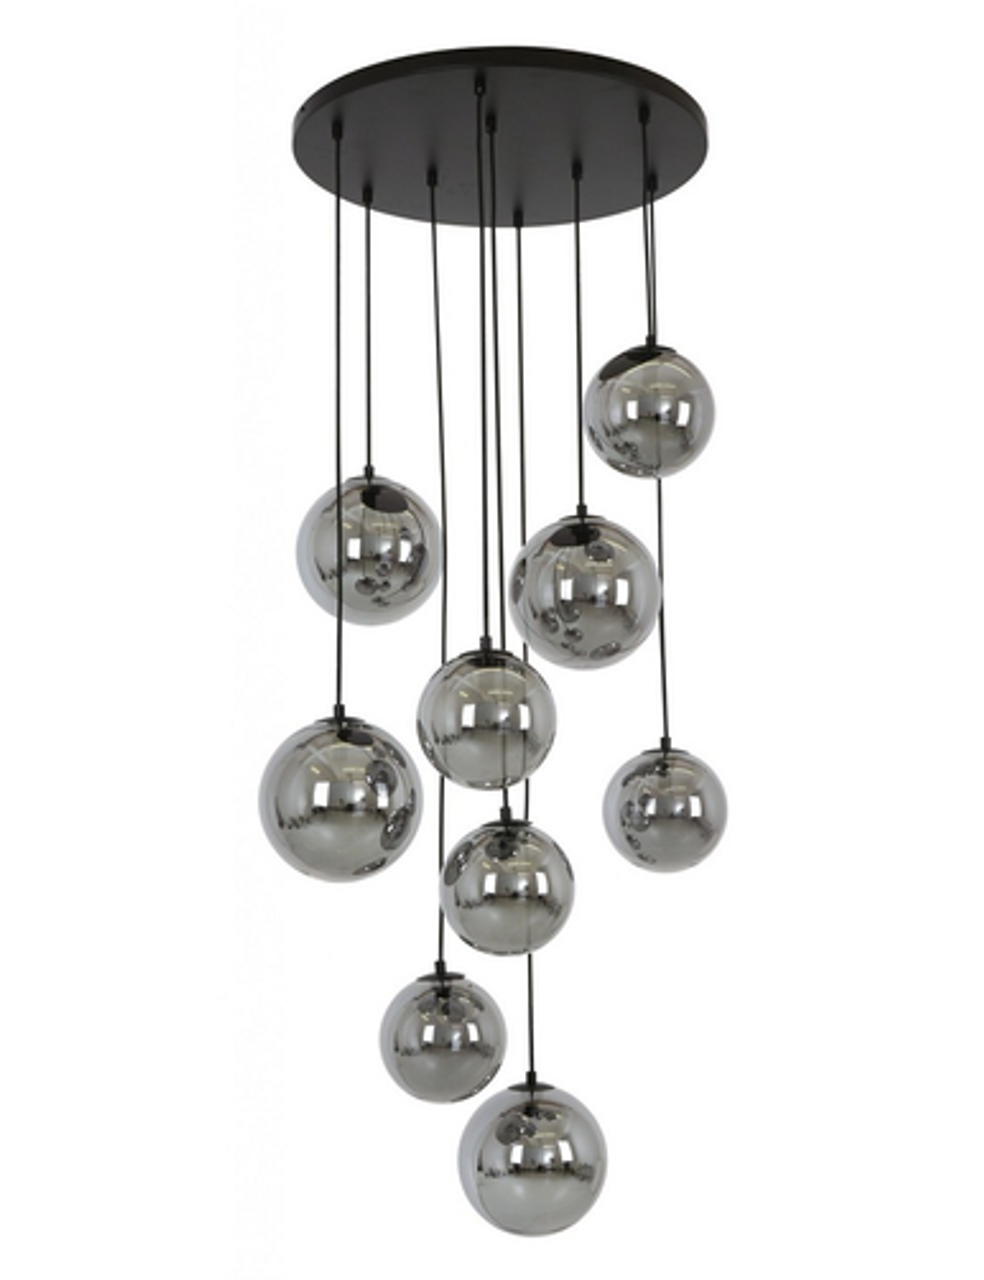 Black nine light pendant with smoke glass